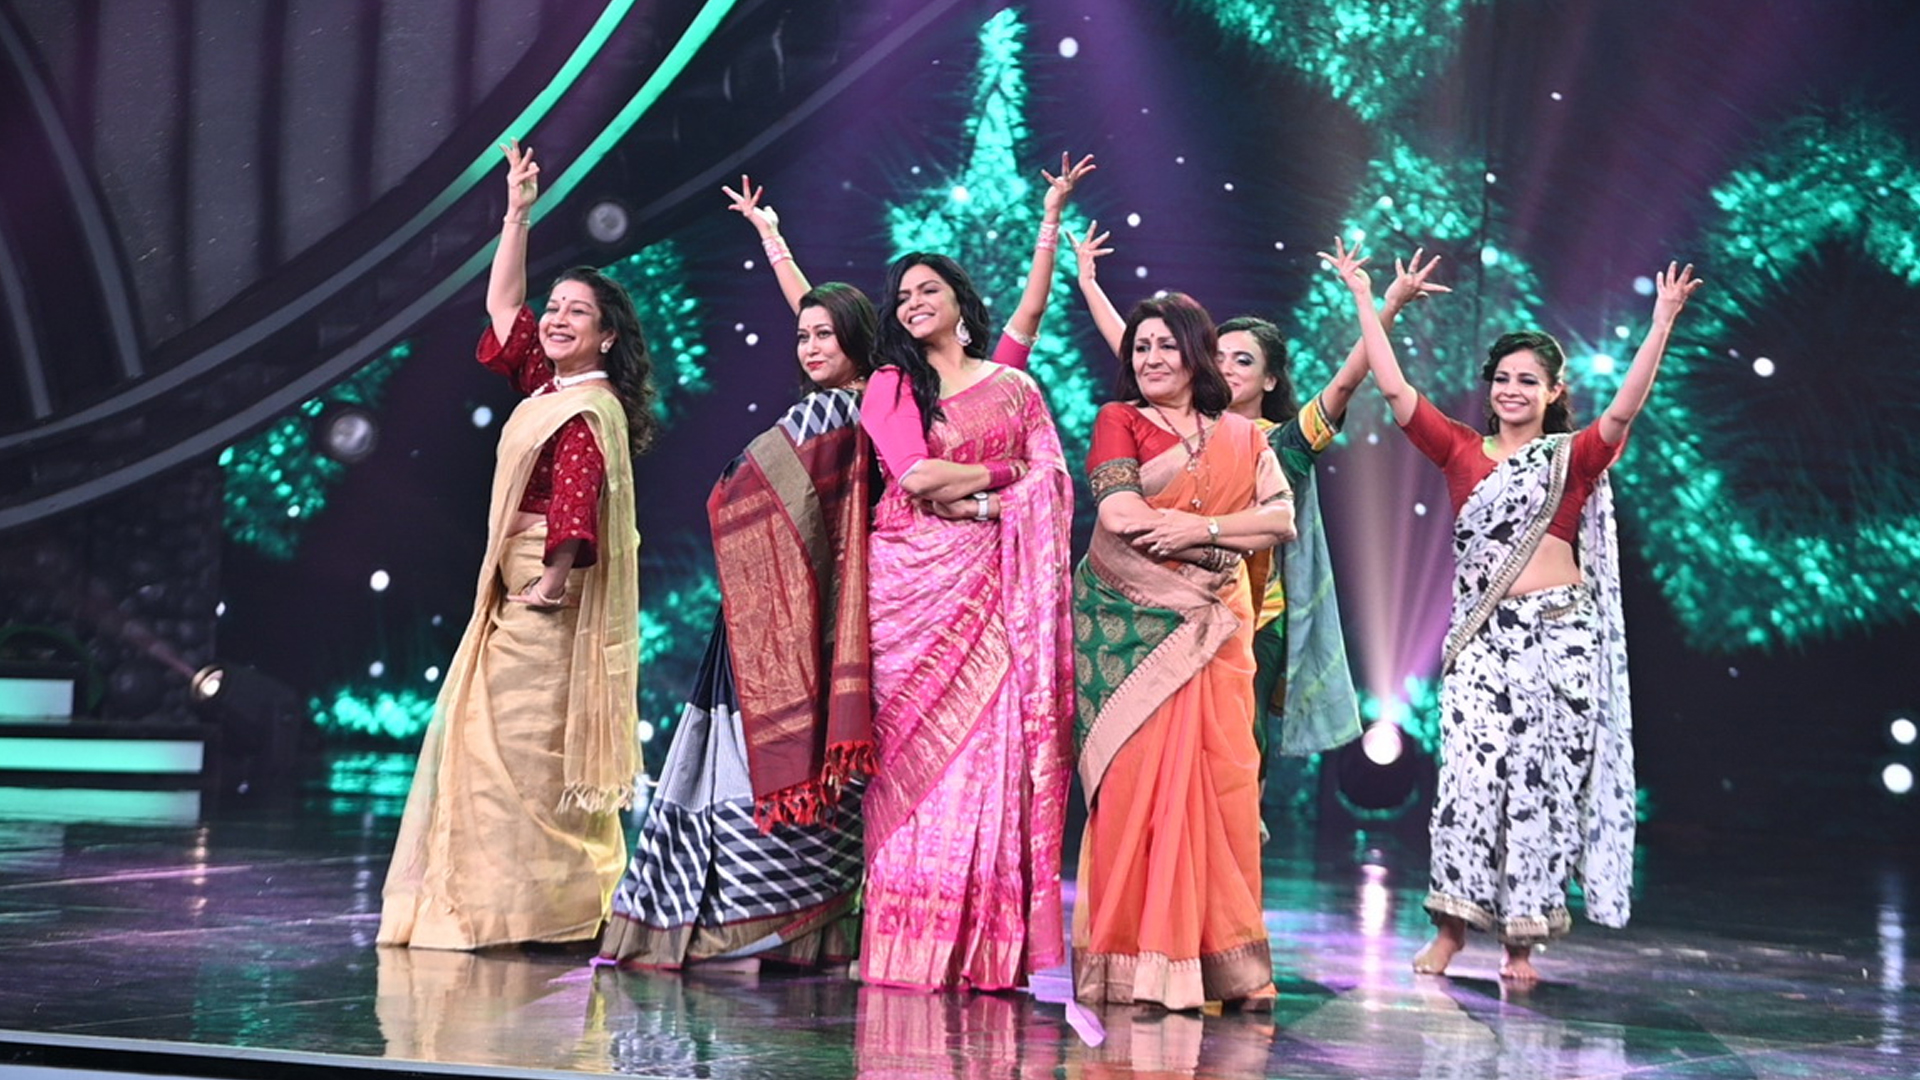 “Baipan Bhari Deva cast celebrate the vibrant Spirit of Mangalagaur on the stage of India’s Best Dancer 3!”